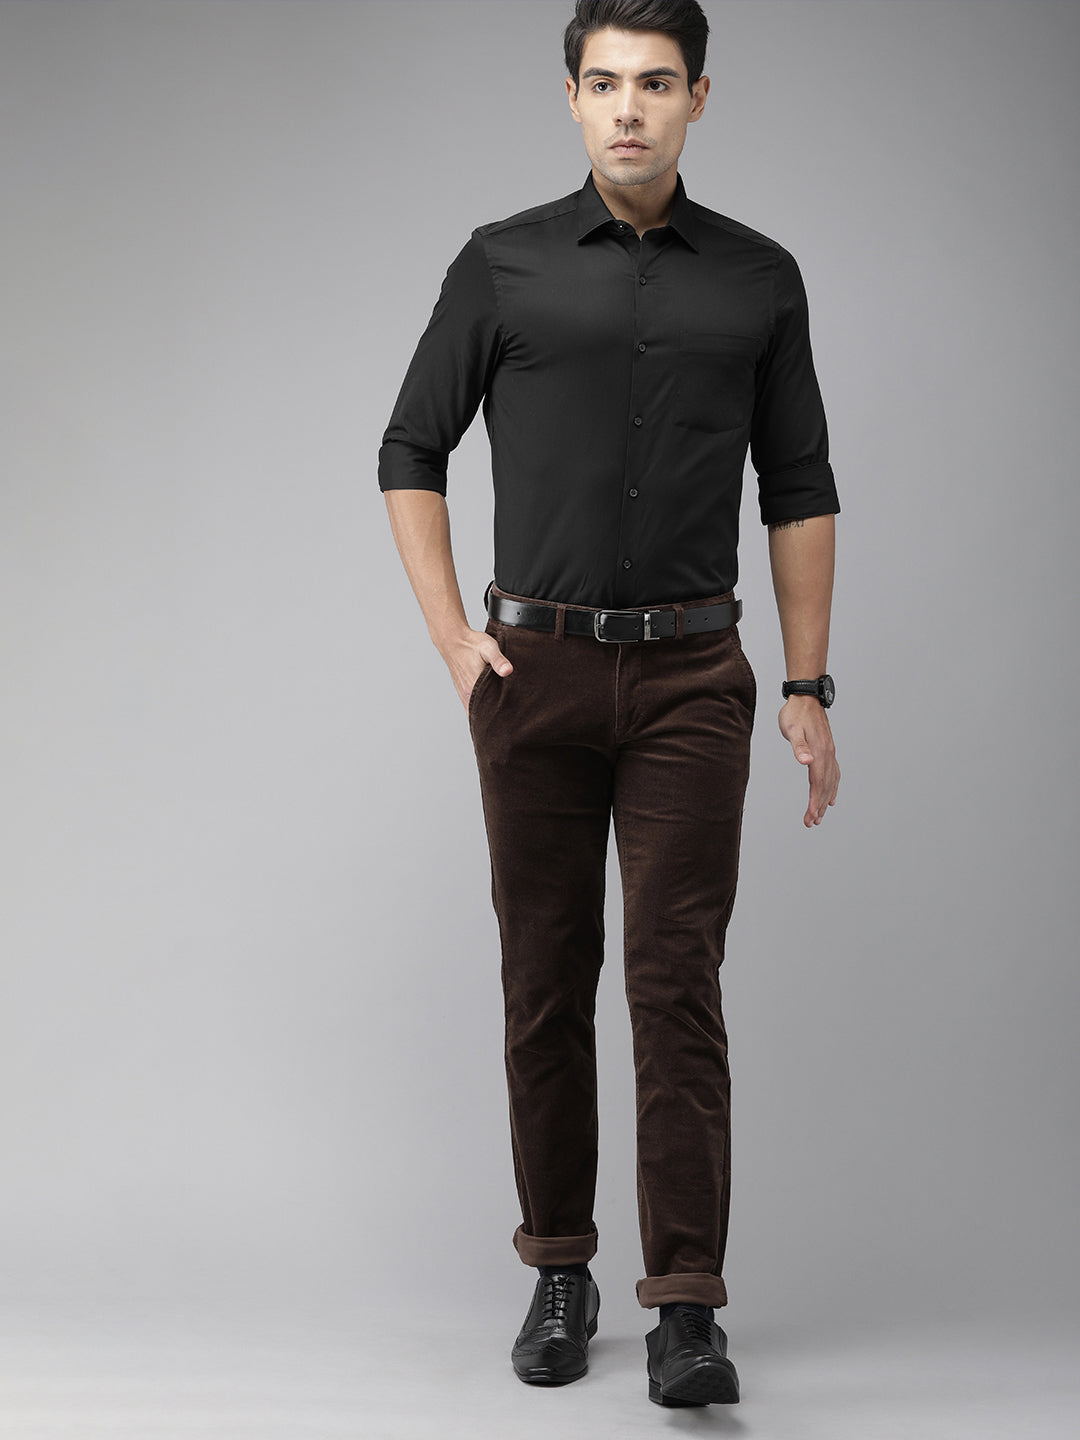 Black Cotton Solid Slim Fit Shirts